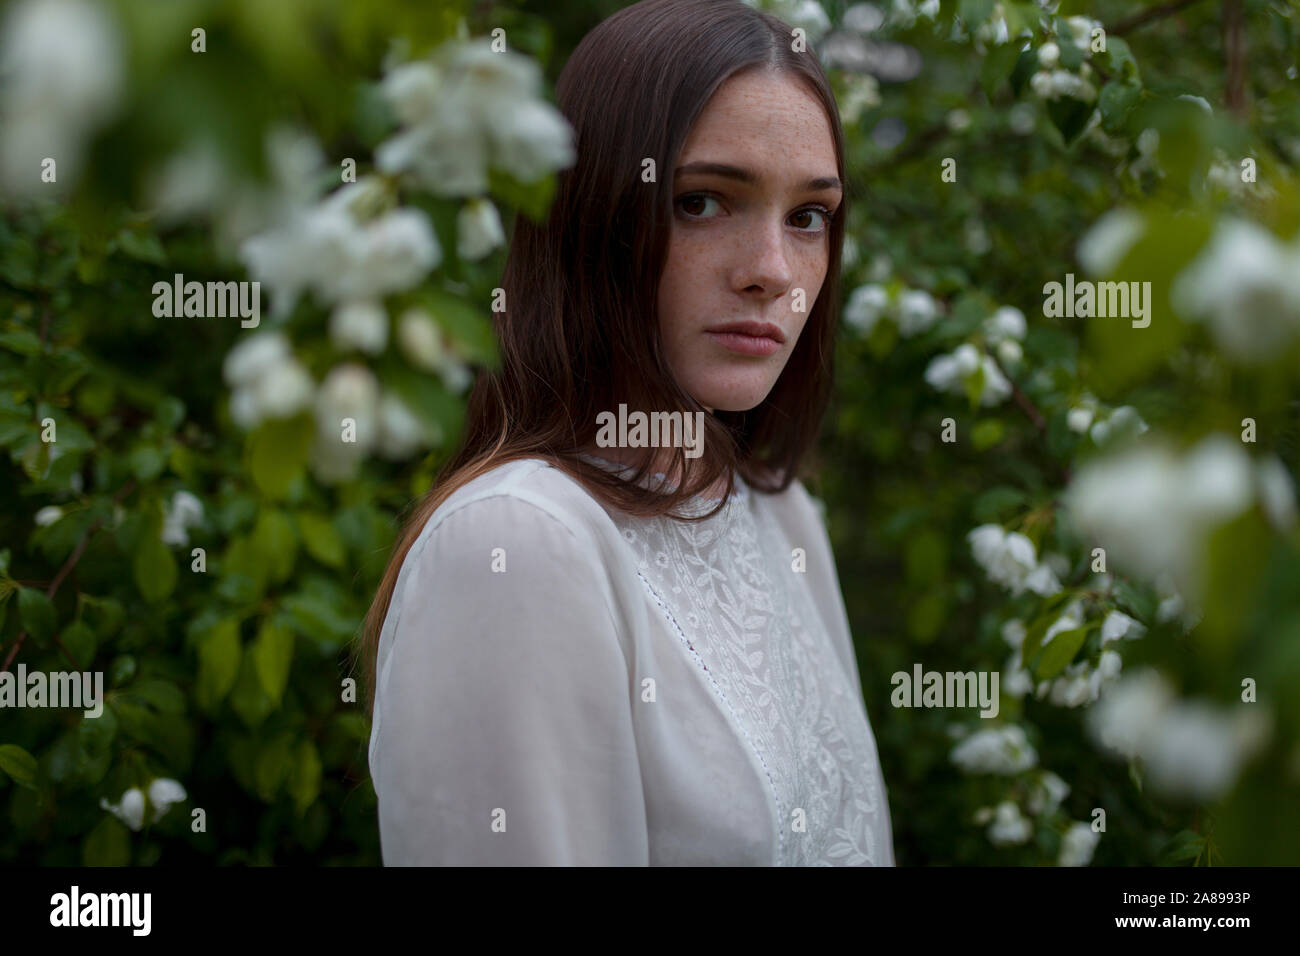 Young woman among white blossoms Stock Photo